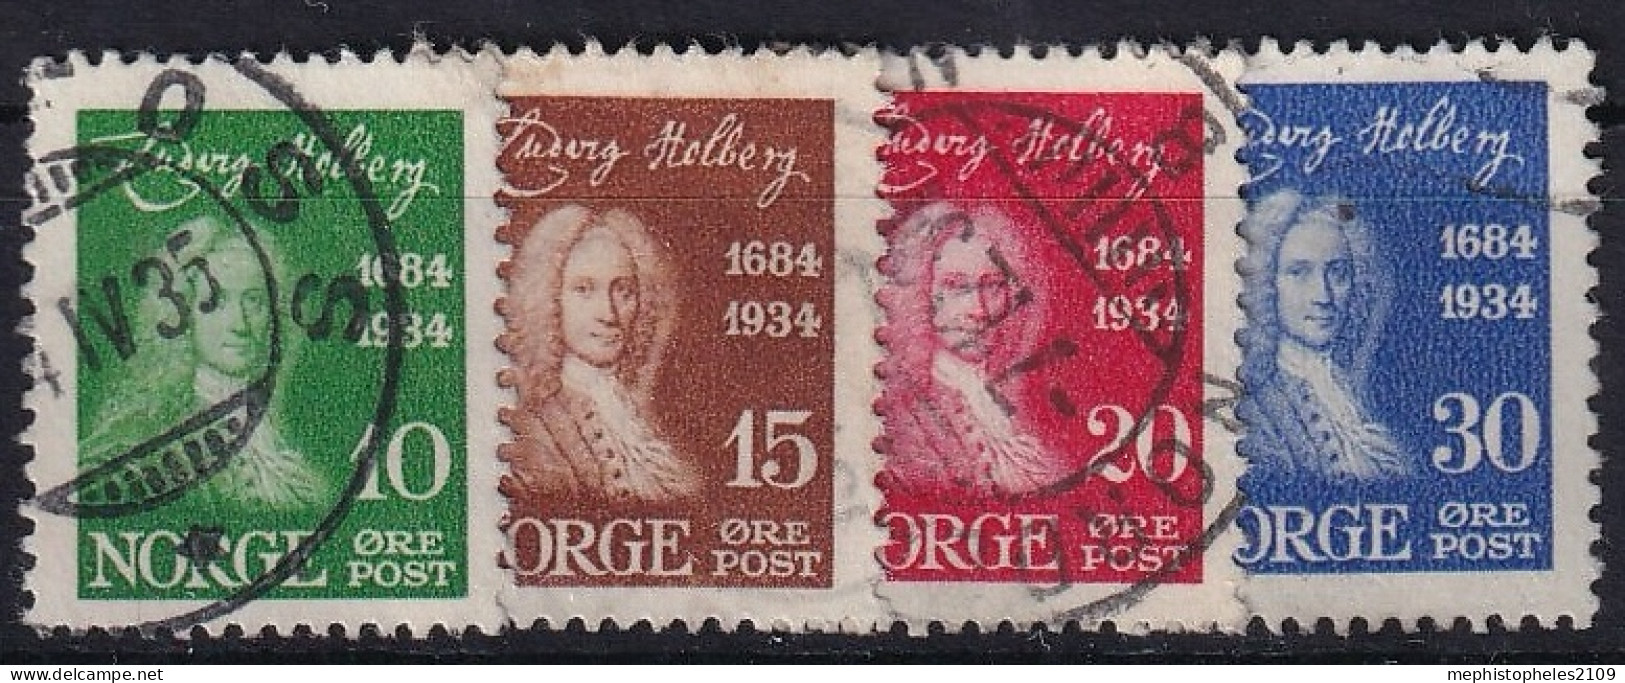 NORWAY 1934 - Cancelerd - Mi 168-171 - Used Stamps